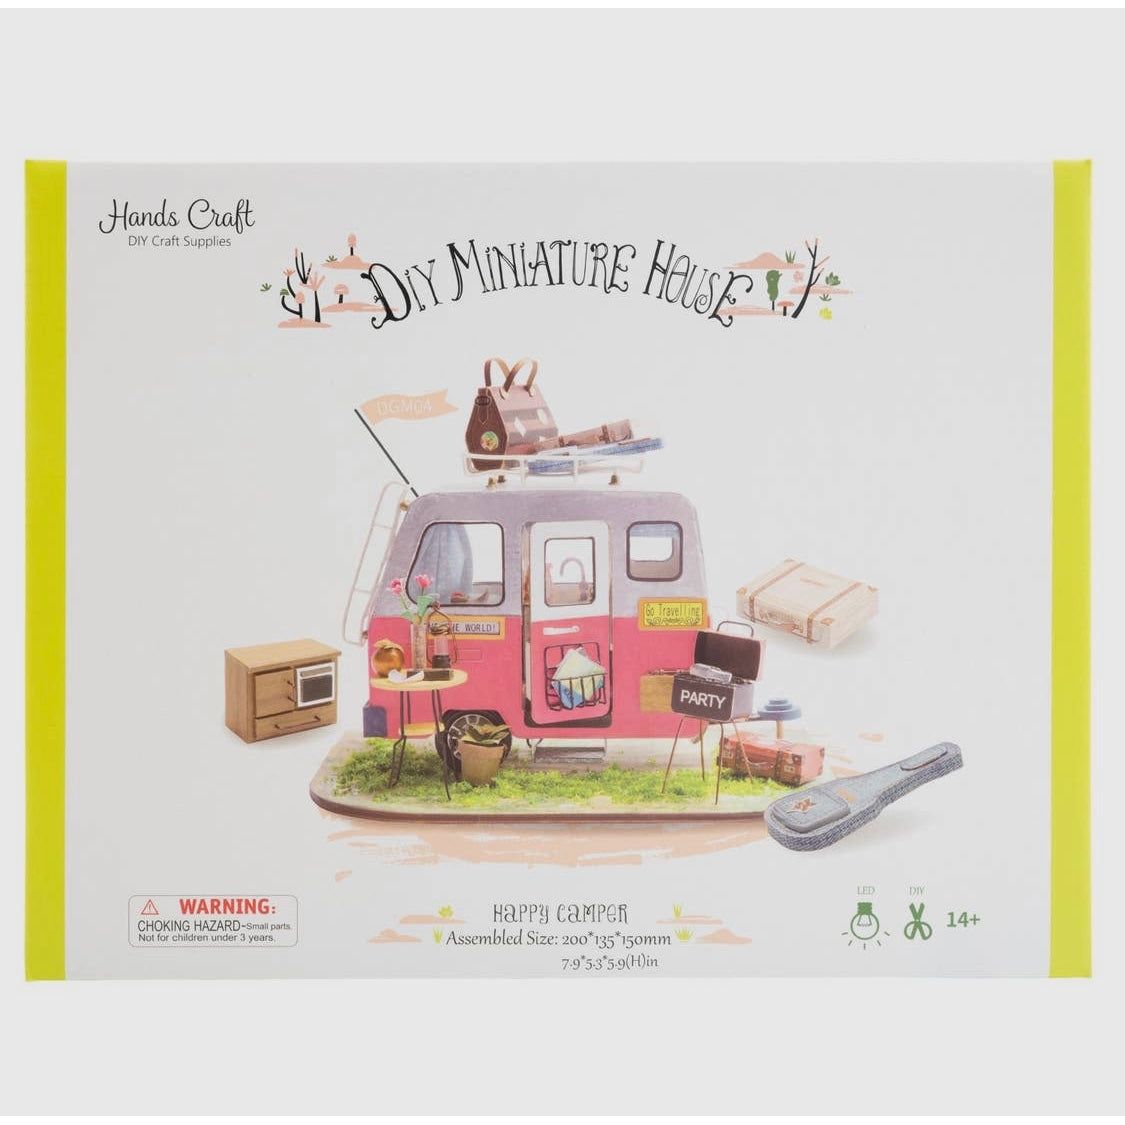 Diy Miniature House Kit:
Happy Camper